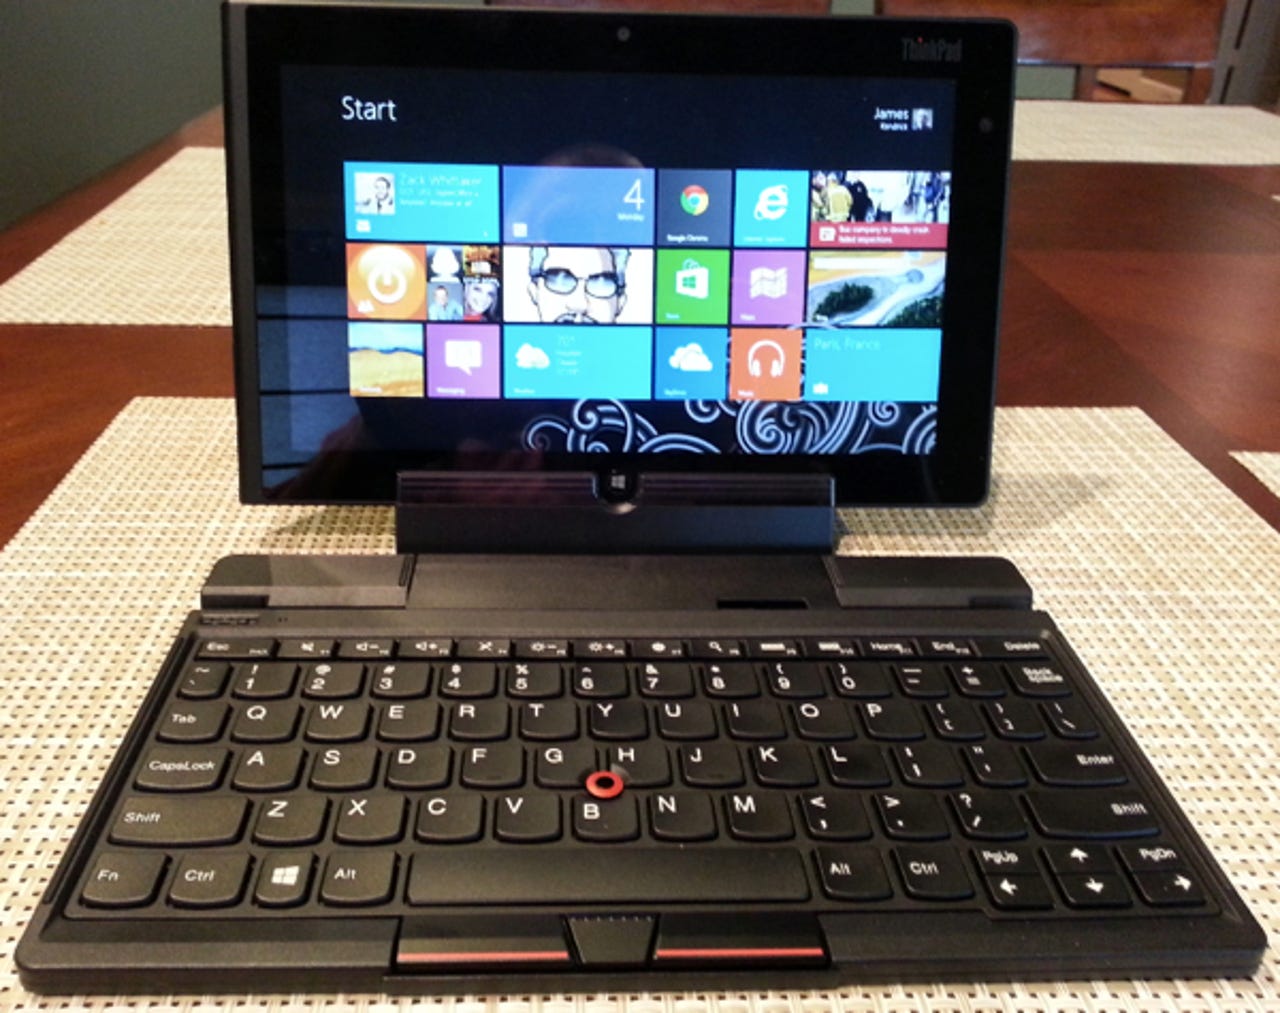 10-tablet-in-dock-with-keyboard-600.jpg